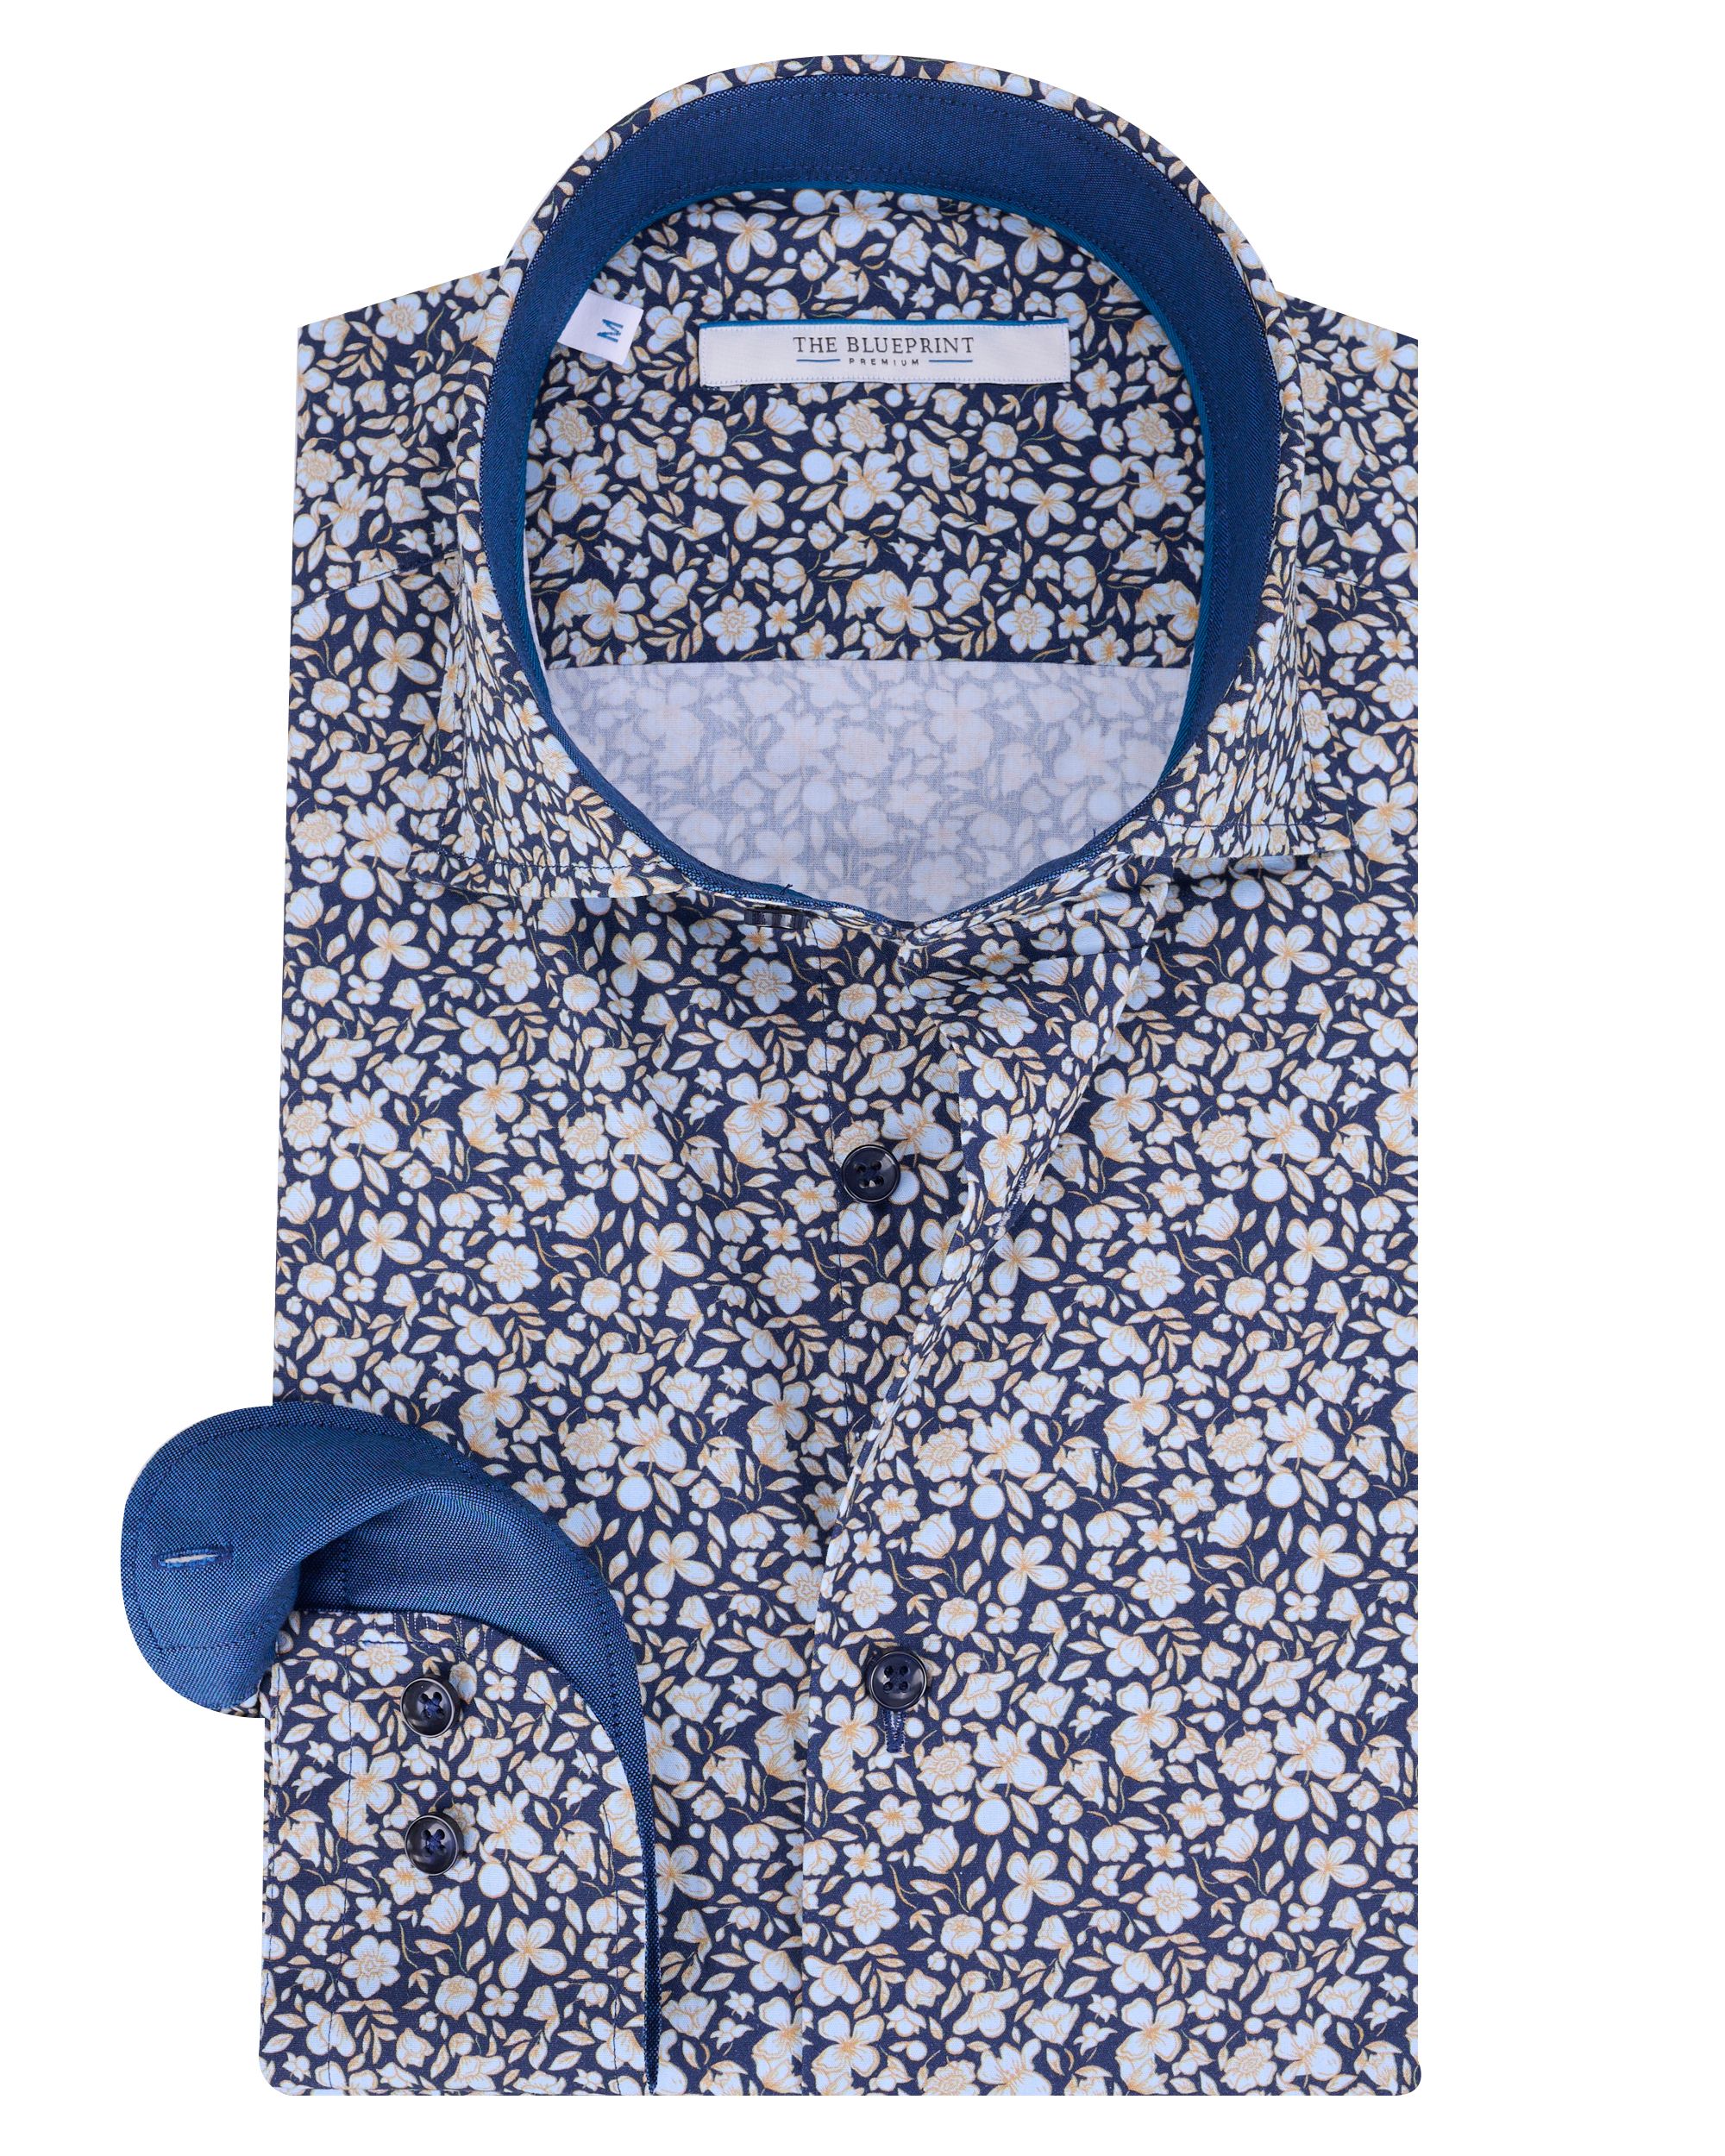 The BLUEPRINT Premium - Trendy overhemd LM Blauw dessin 086650-001-L